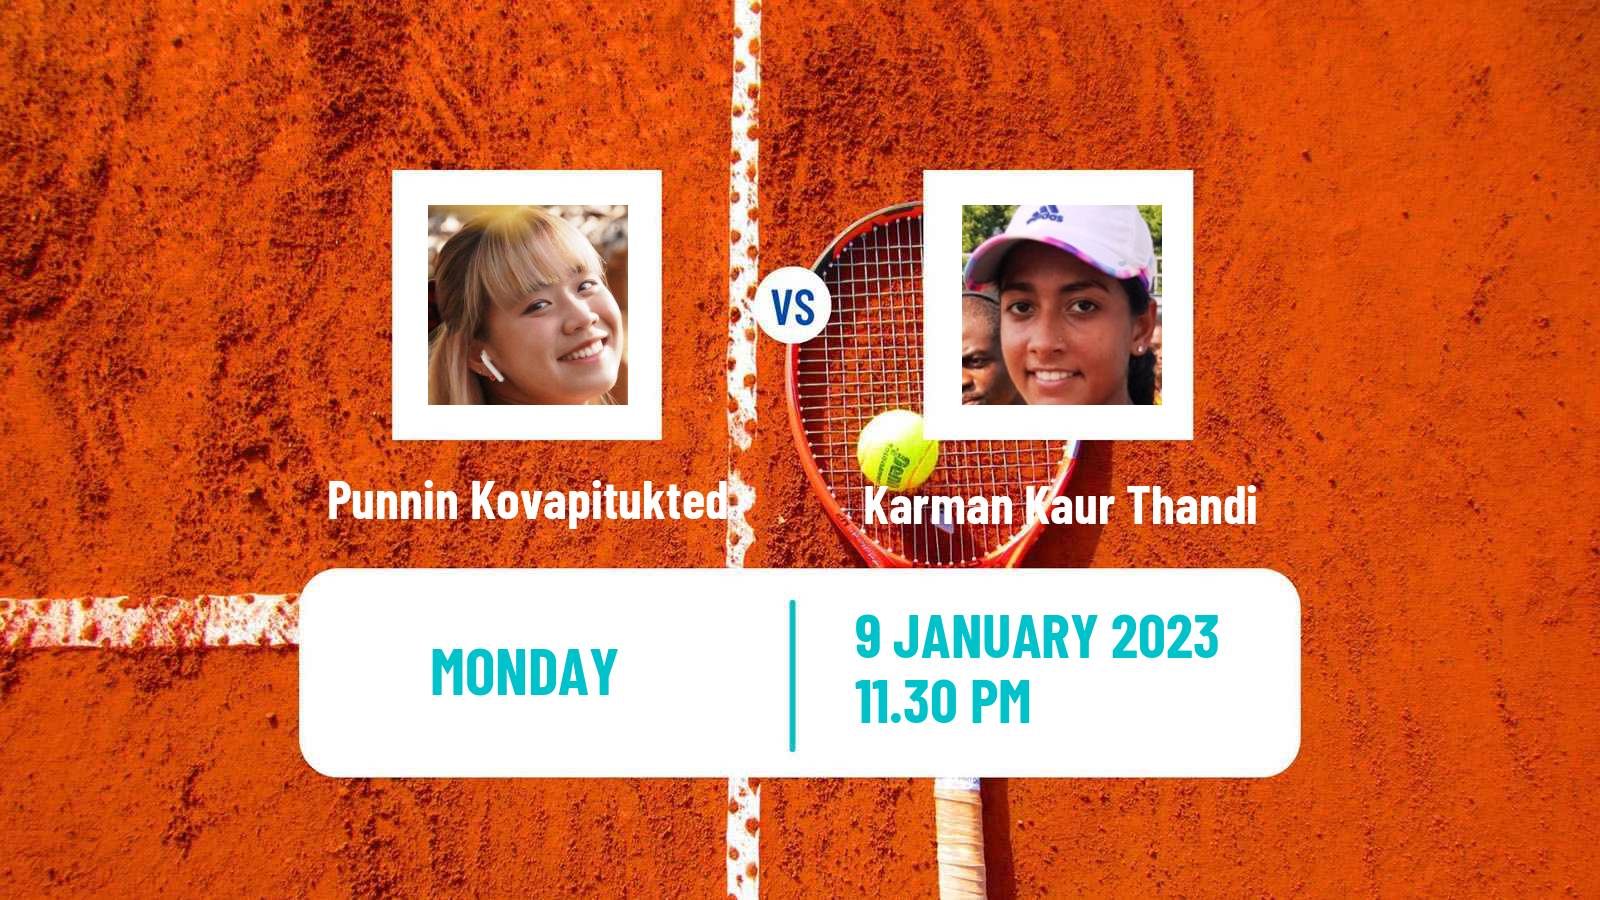 Tennis ITF Tournaments Punnin Kovapitukted - Karman Kaur Thandi